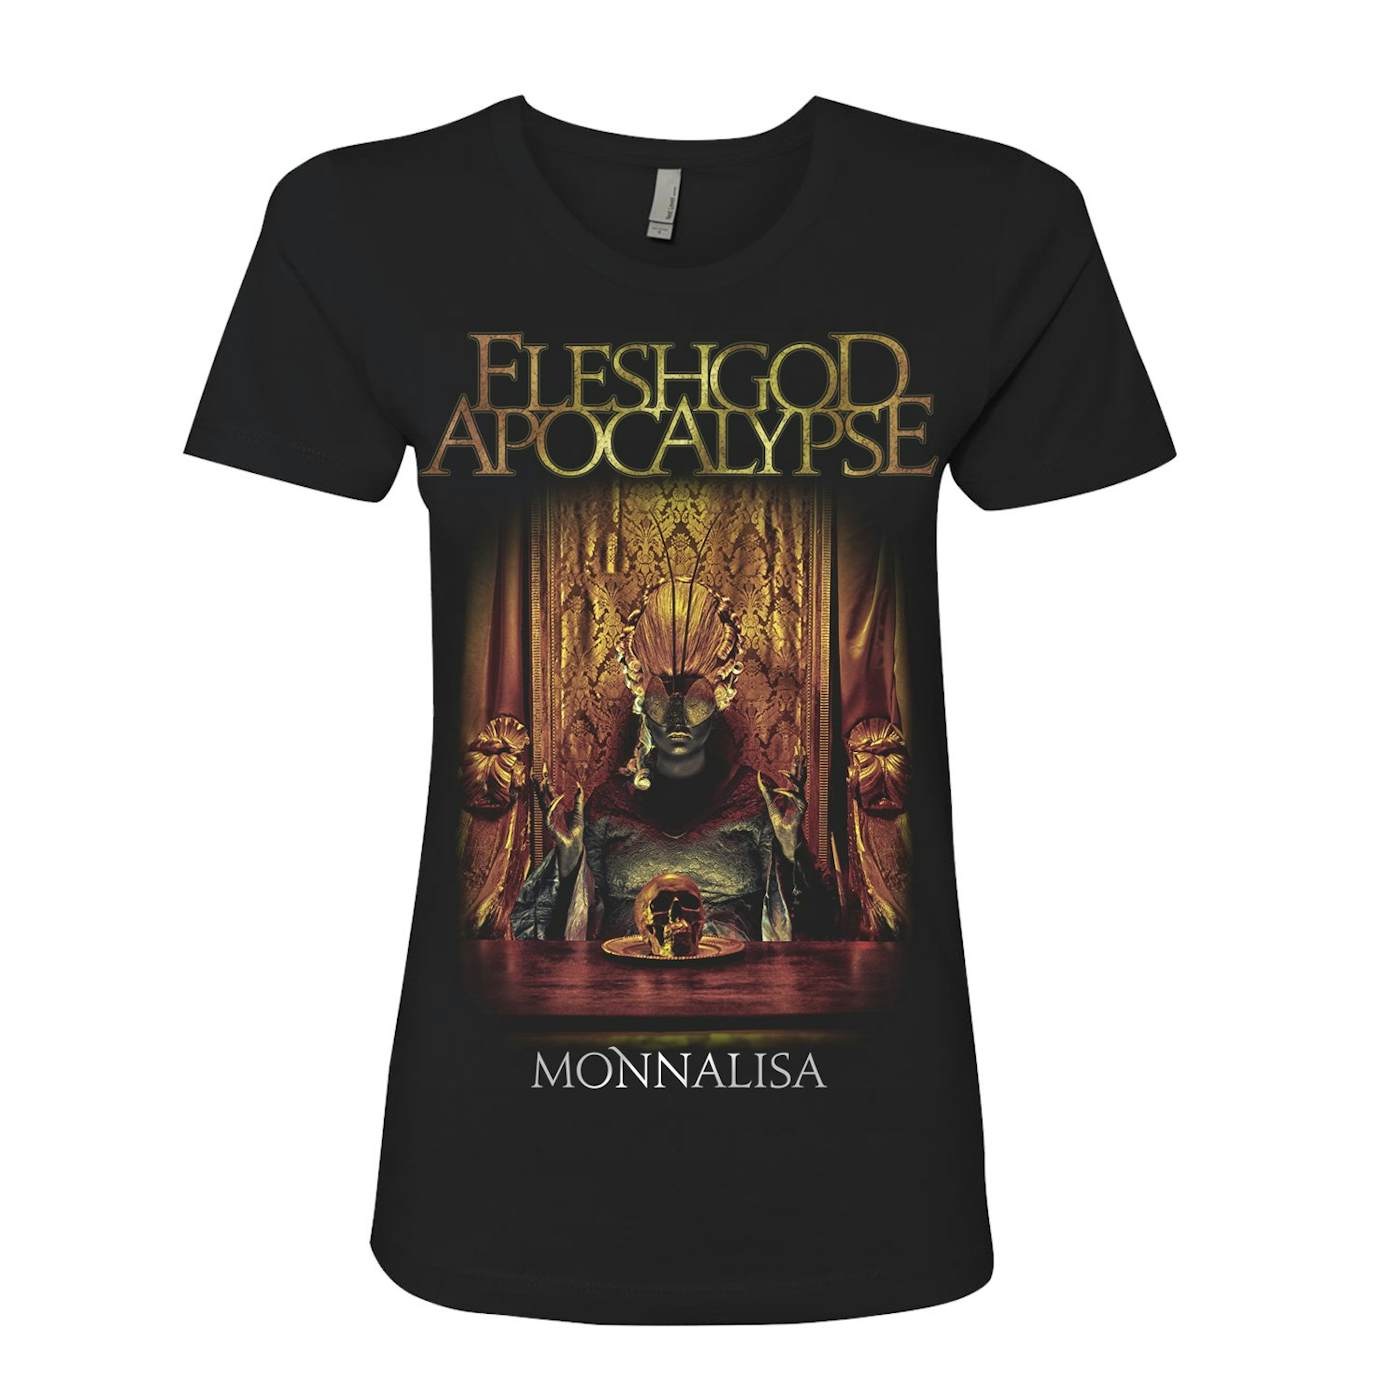 Fleshgod Apocalypse "Monnalisa" Girls T-shirt